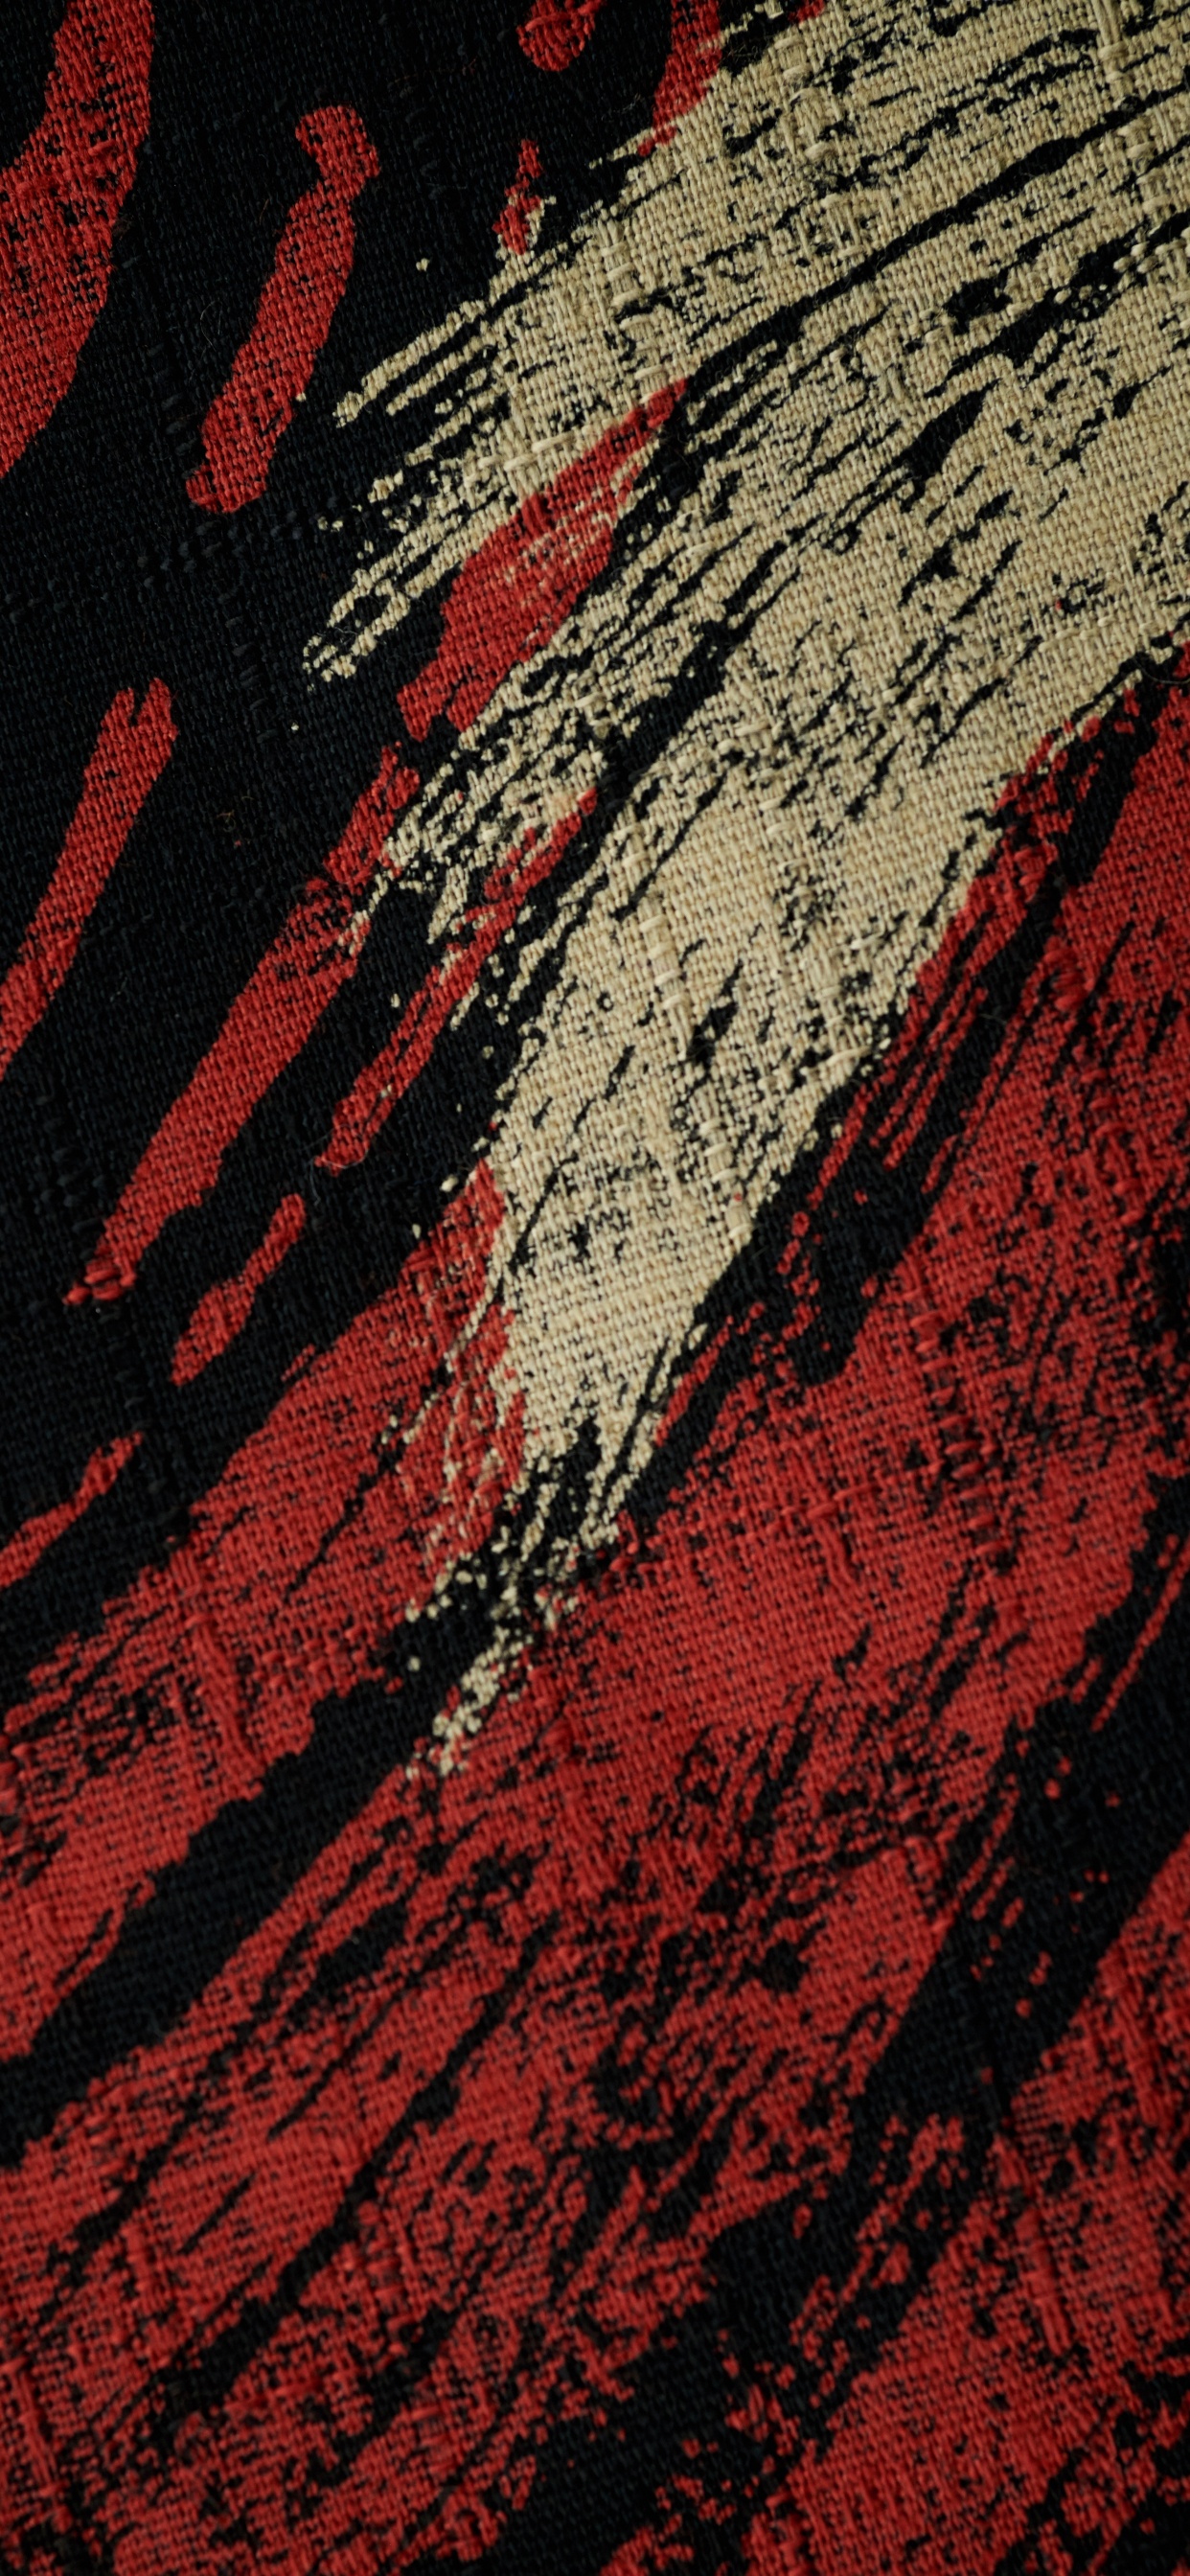 Textil Rojo Blanco y Negro. Wallpaper in 1242x2688 Resolution